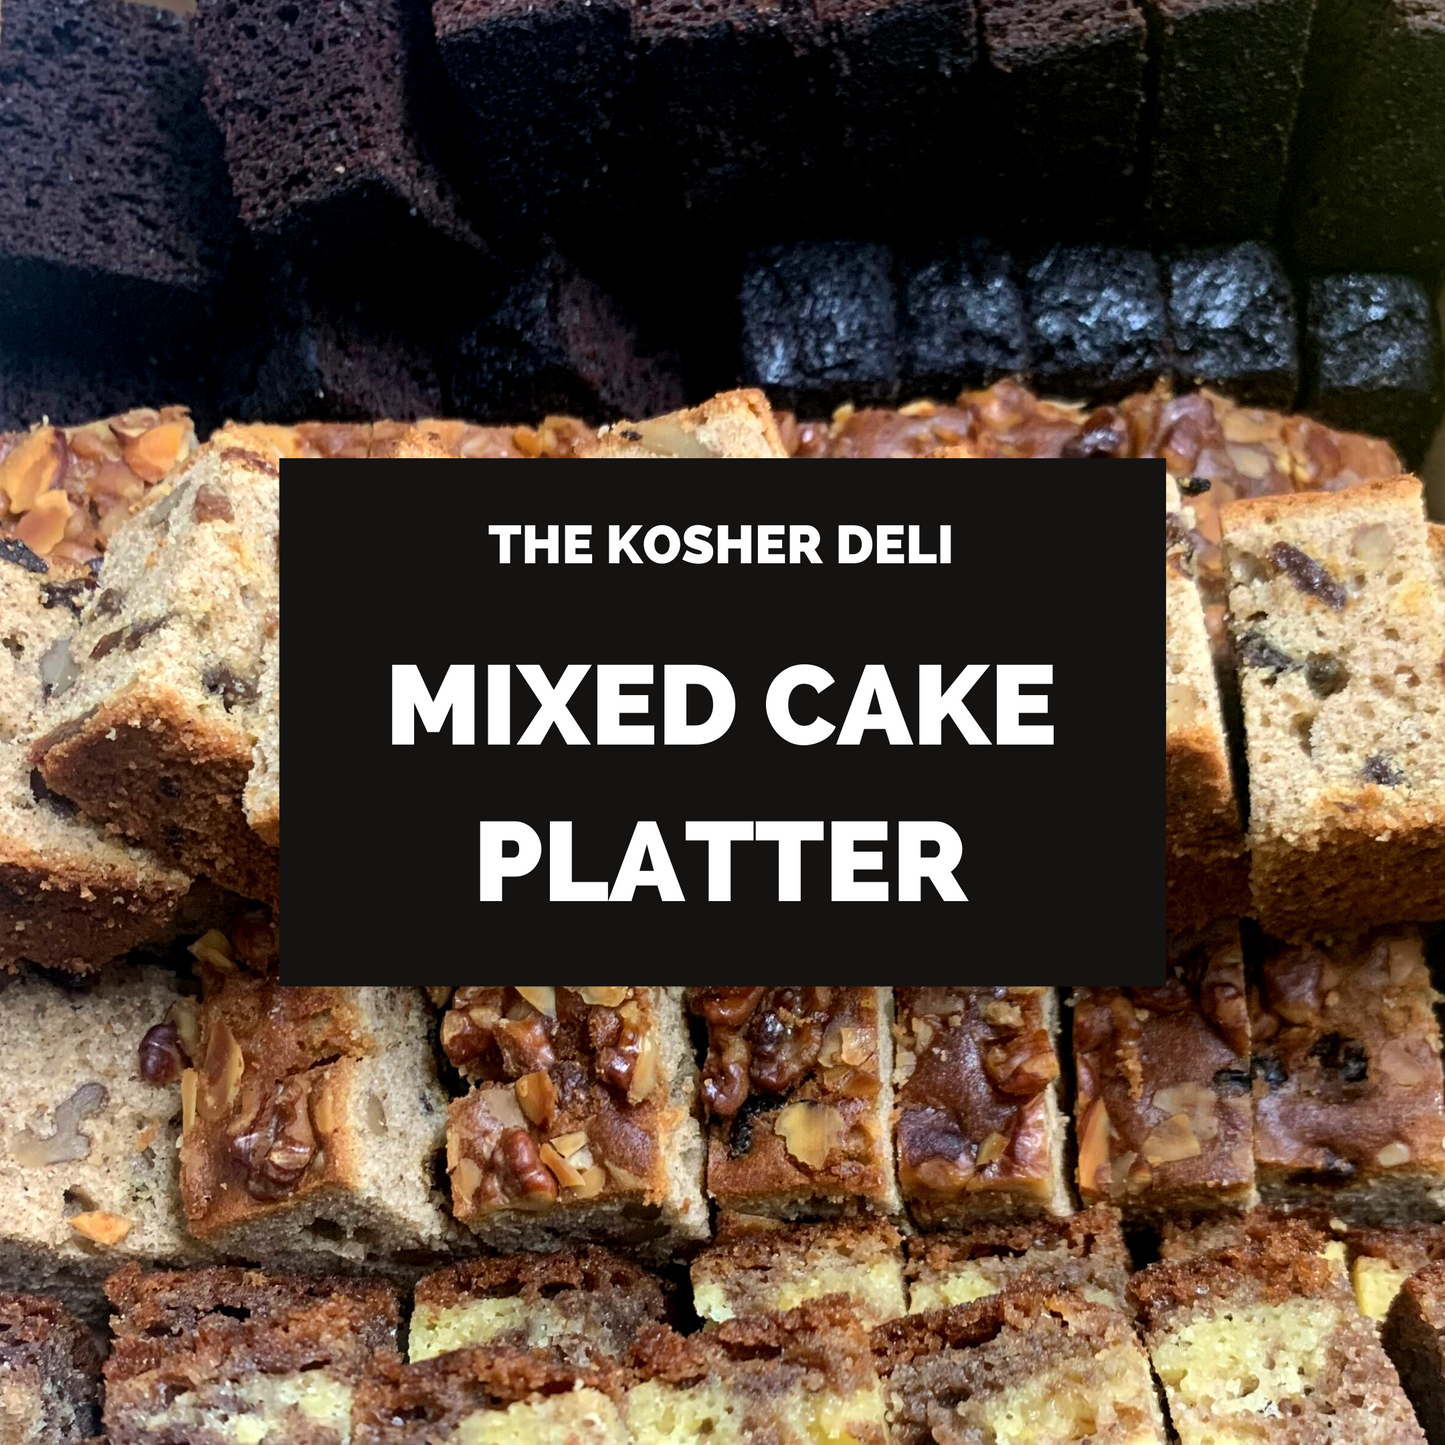 Mixed cake Platter - serves 15-20 people